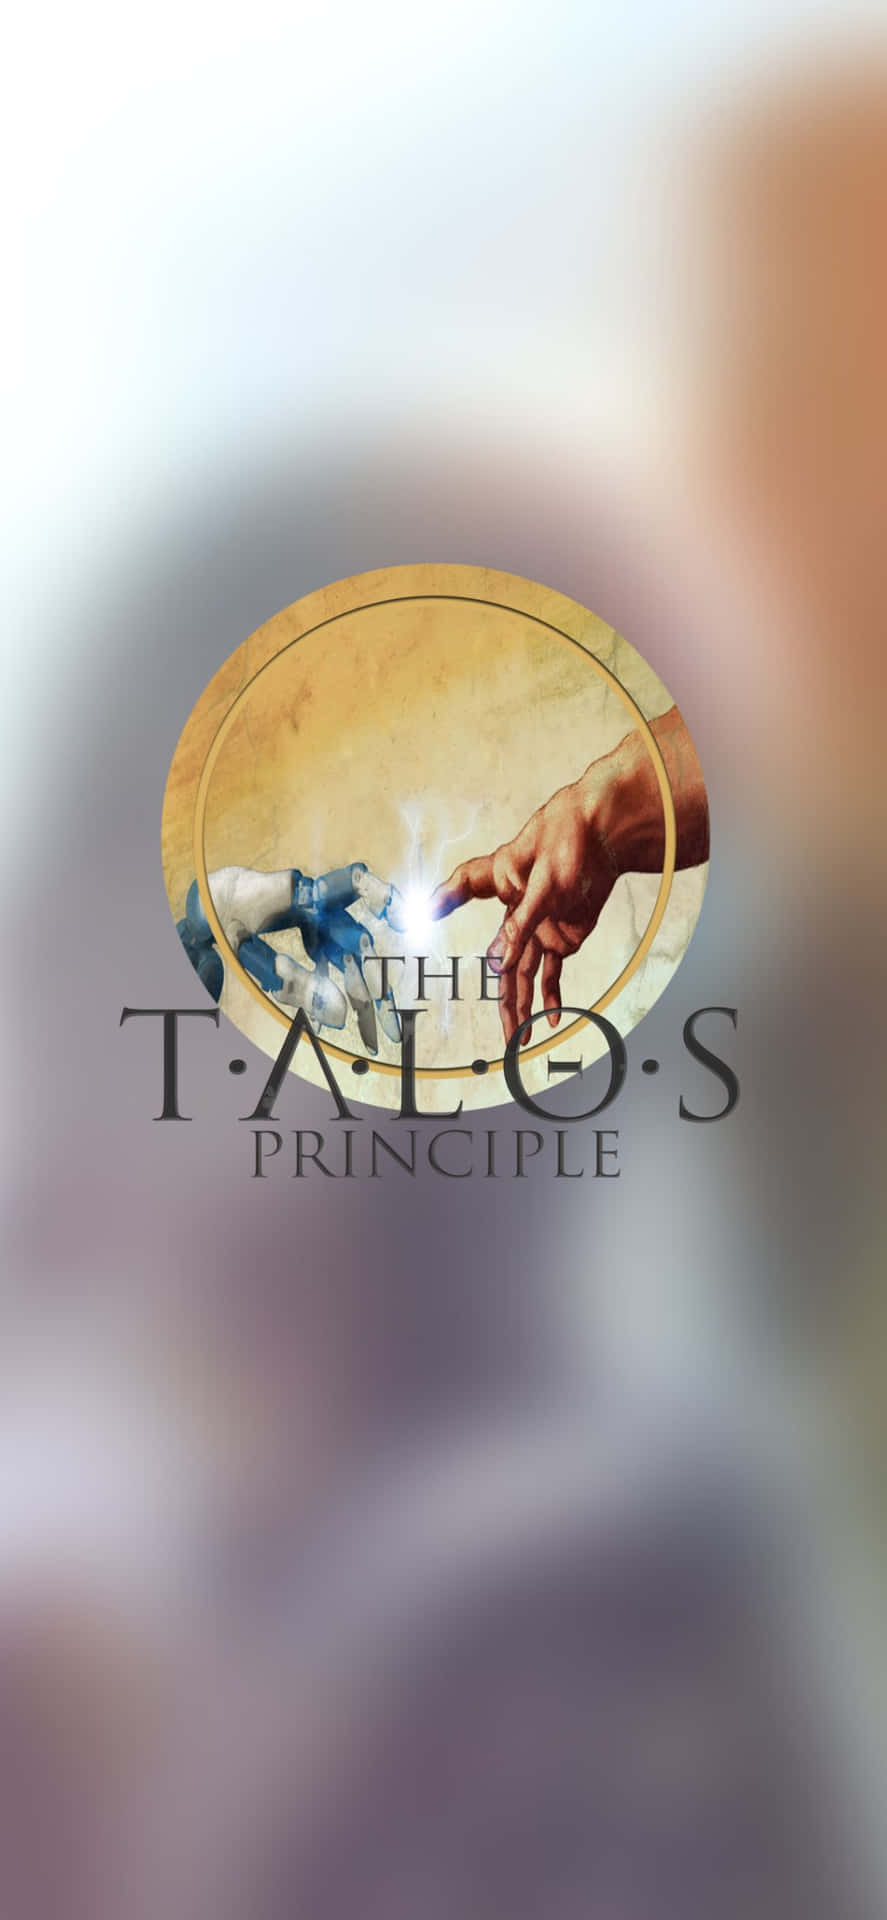 "The Talos Principle: A Mystical Puzzle Adventure"